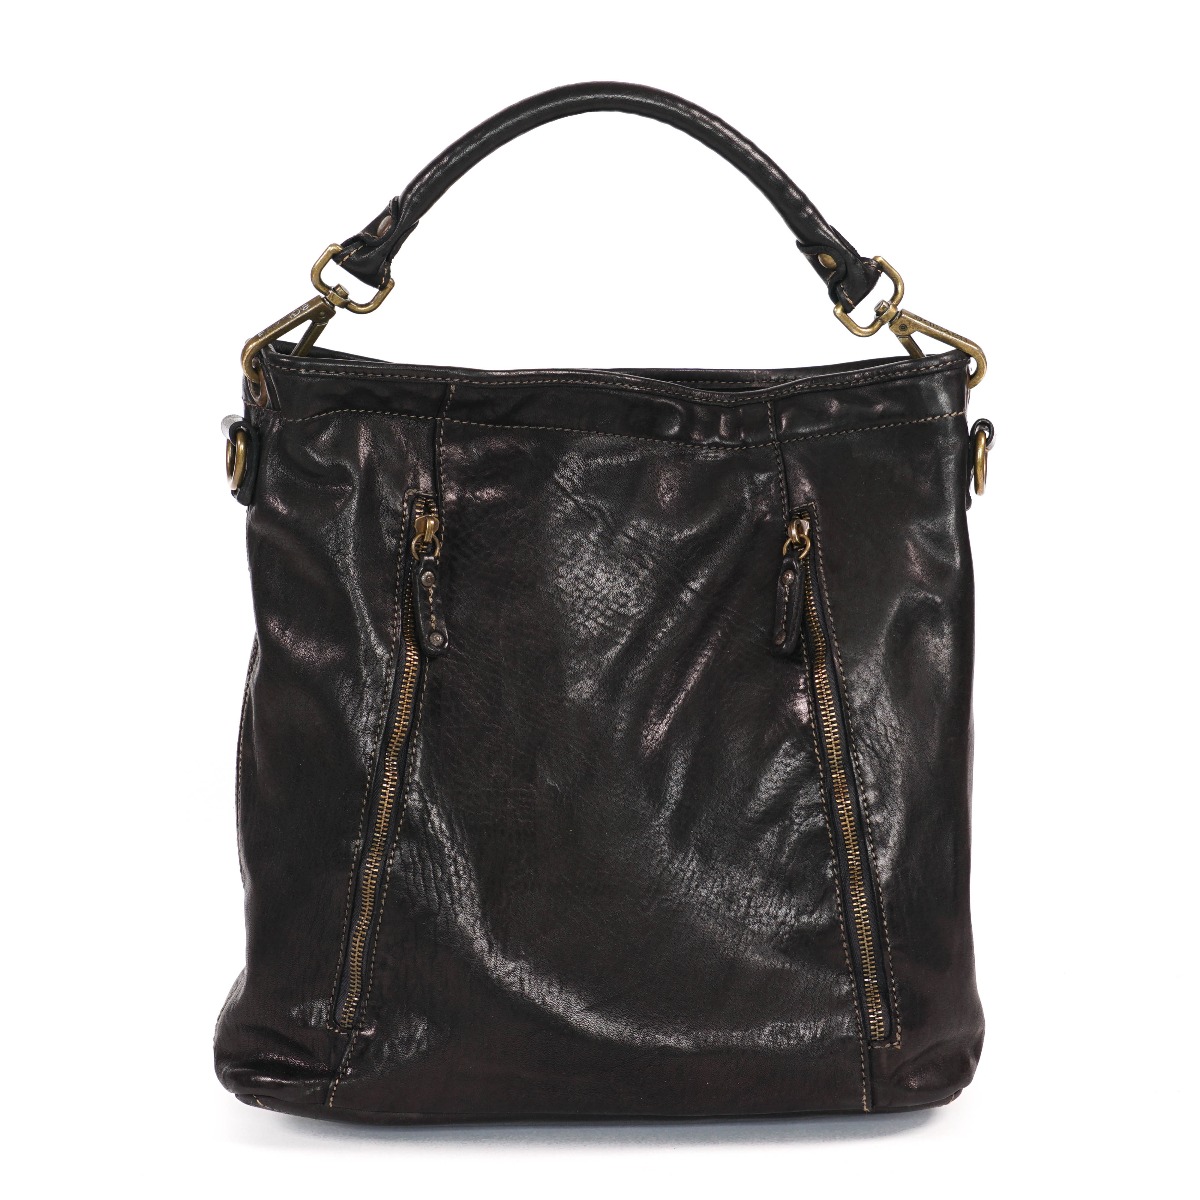 Black tanned leather bag - backpack